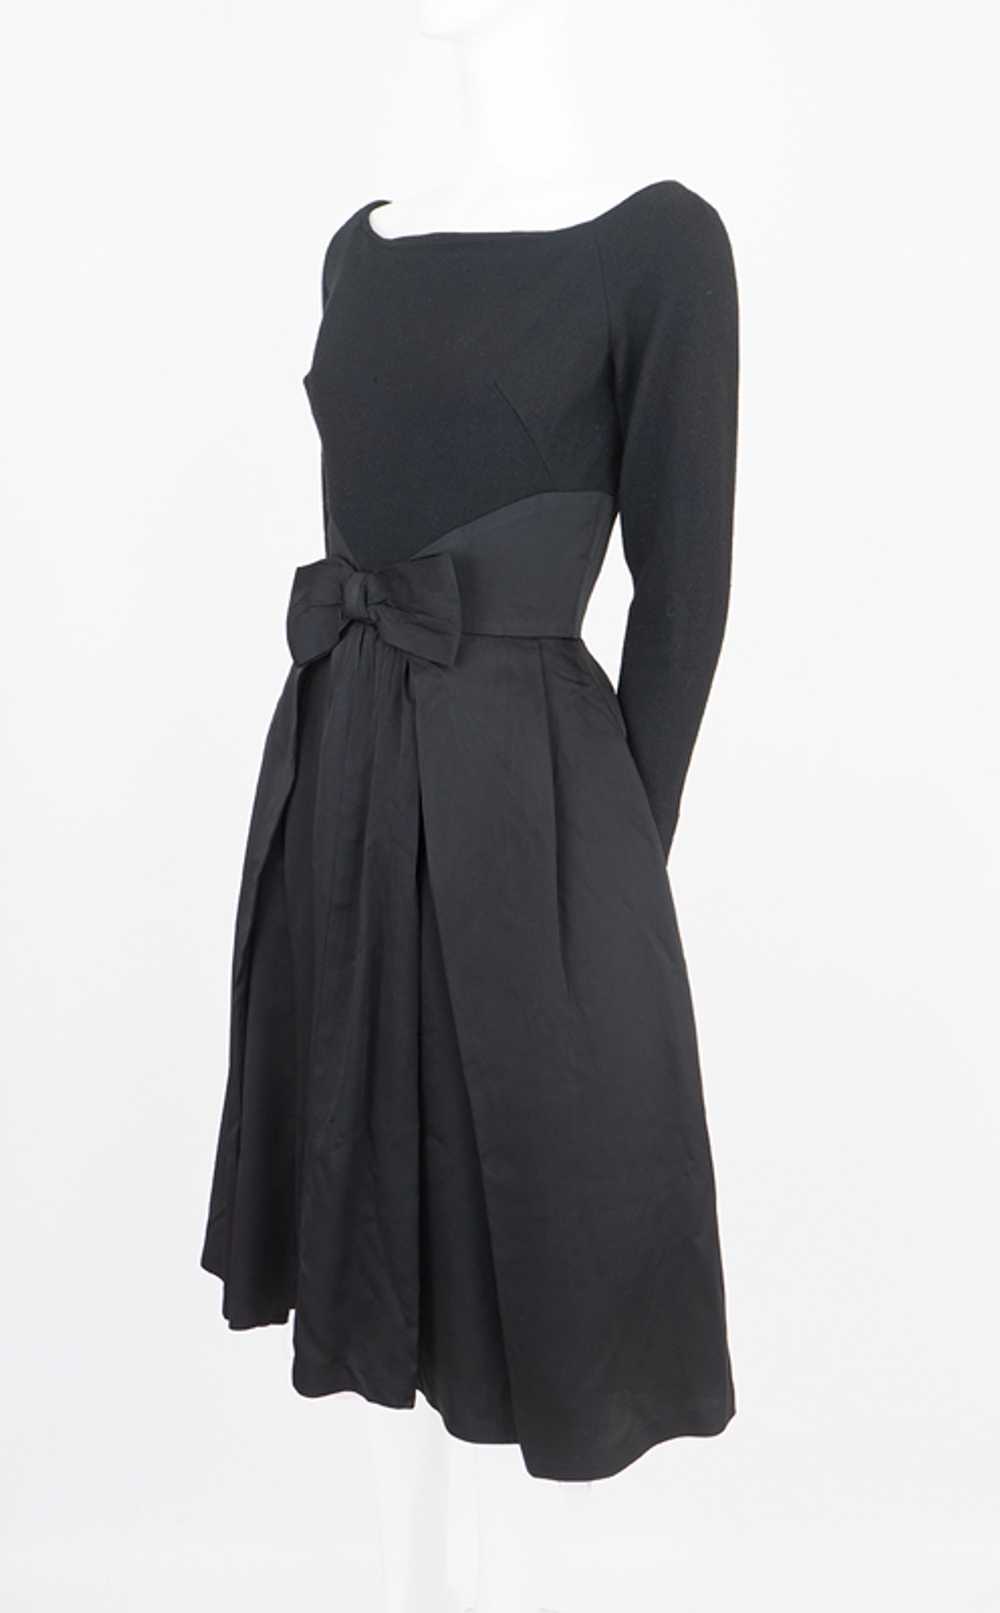 1950s Black Cocktail Dress - image 1